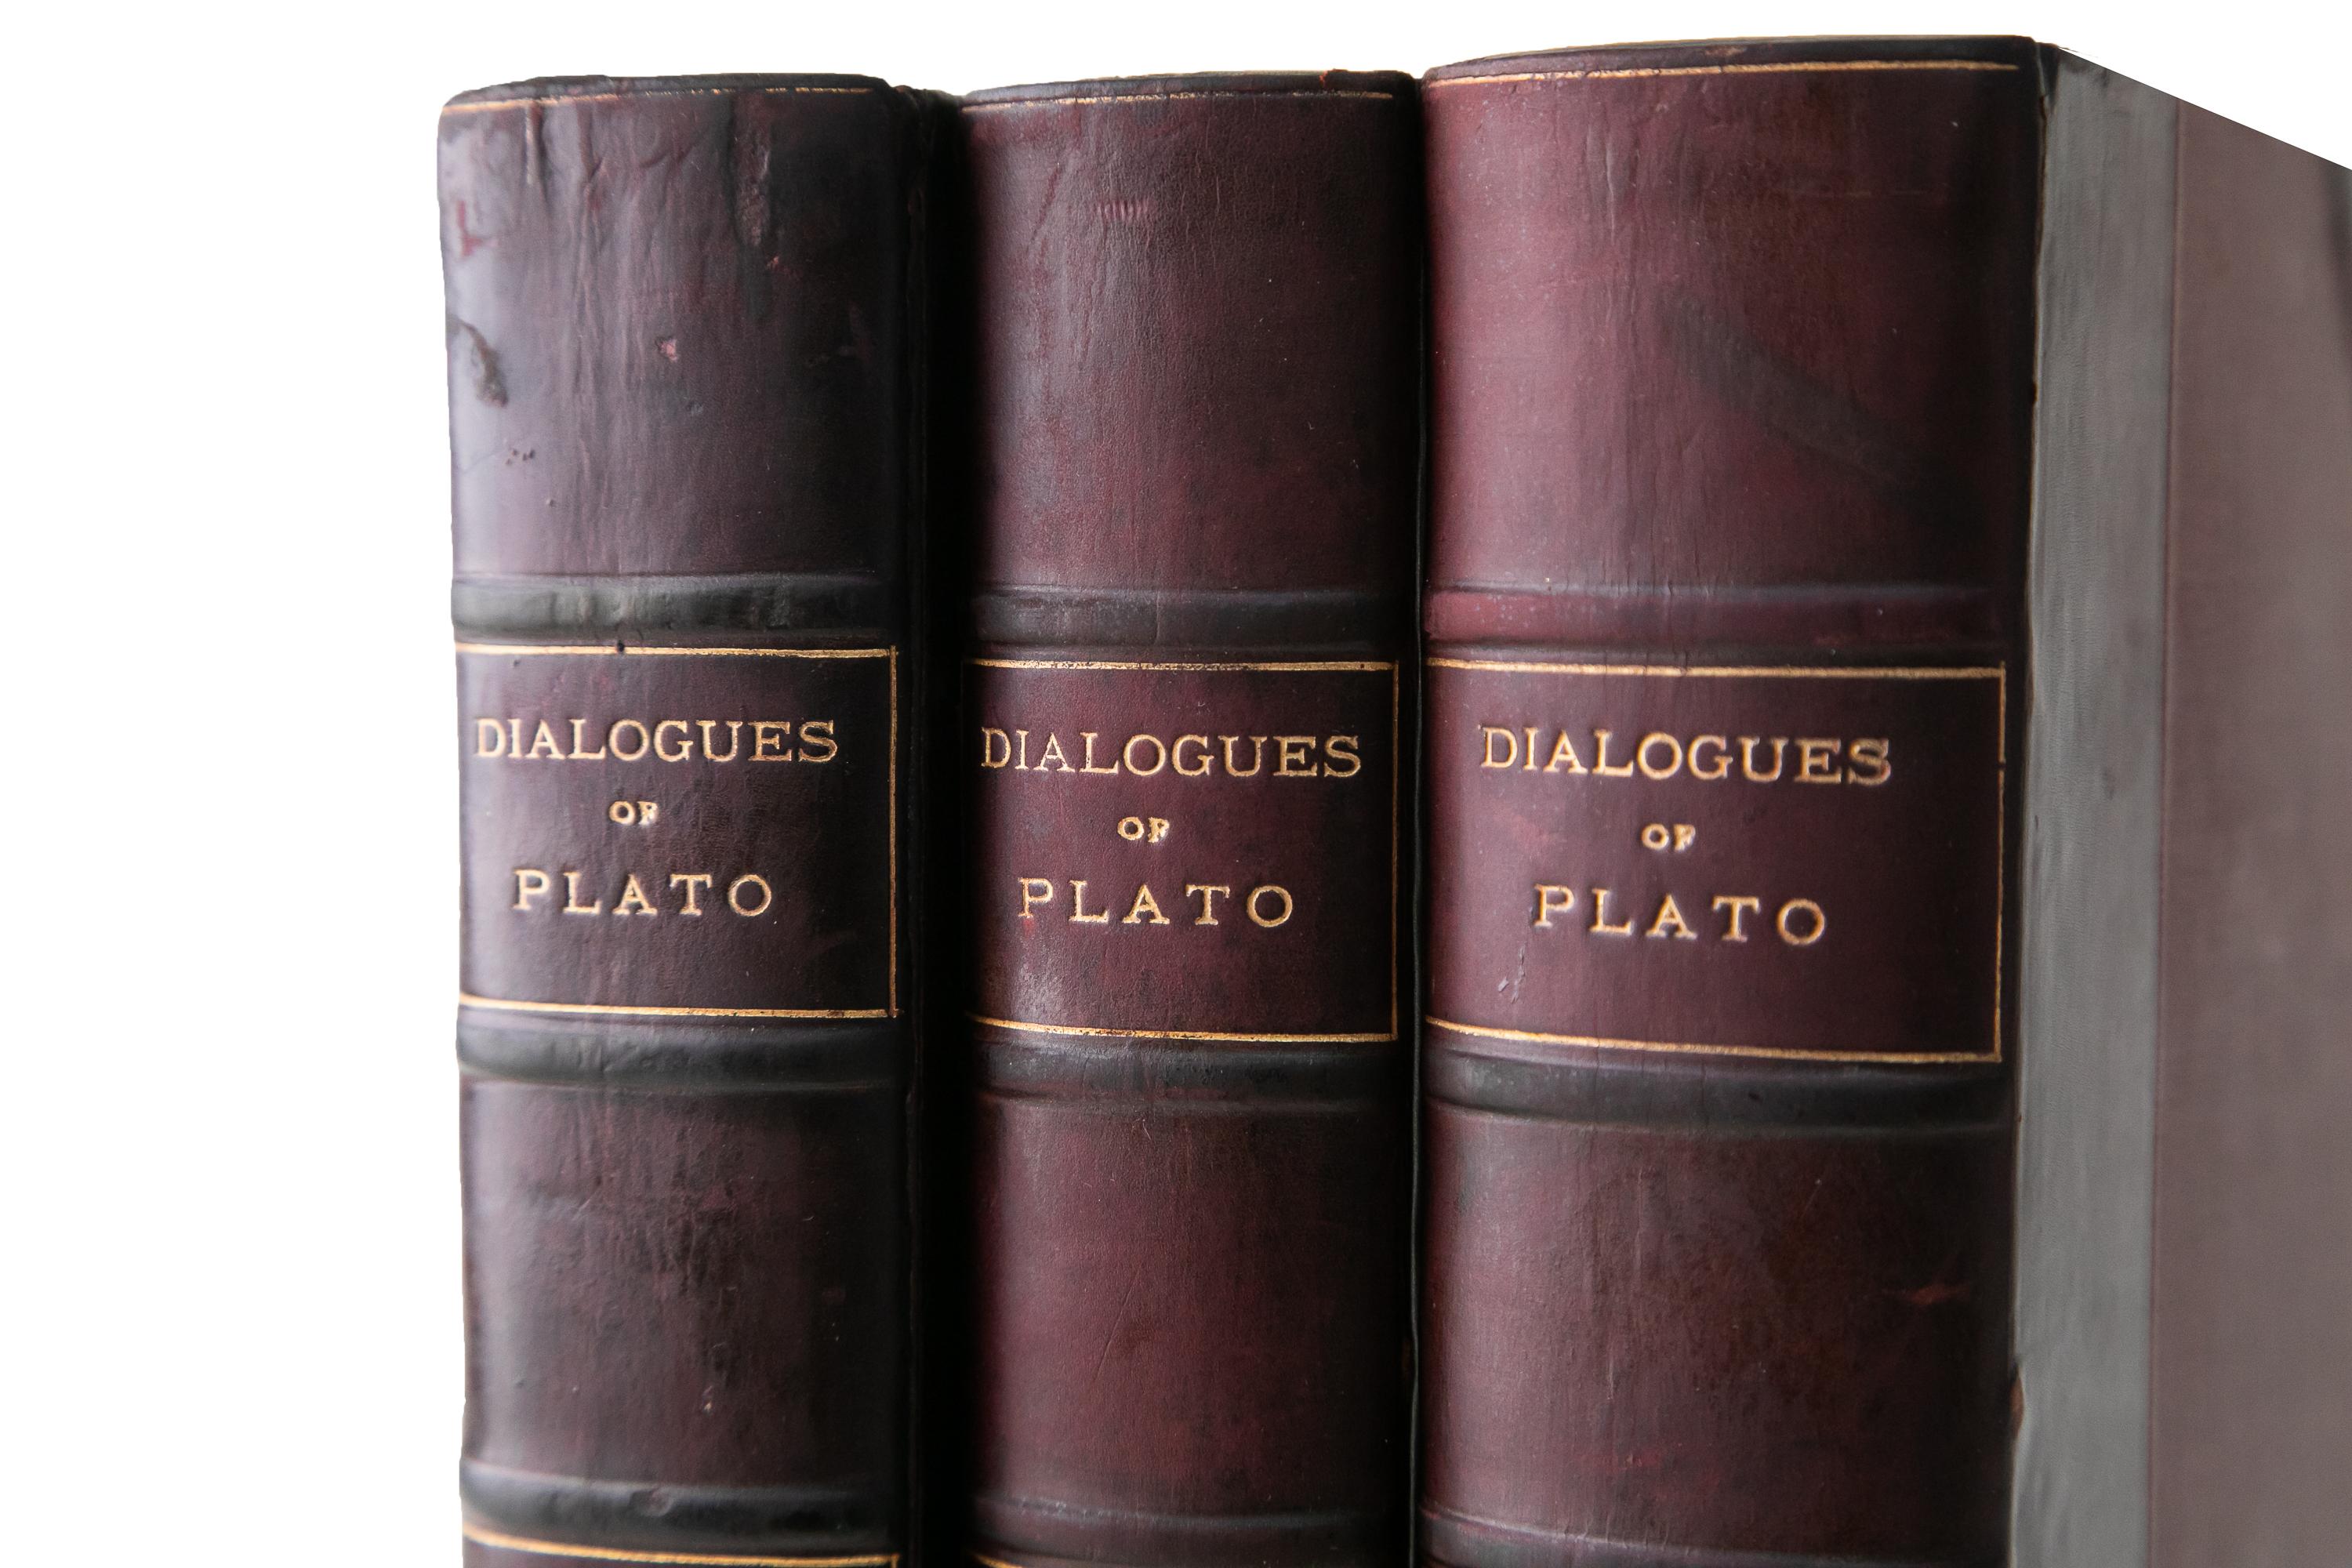 plato's 5 dialogues